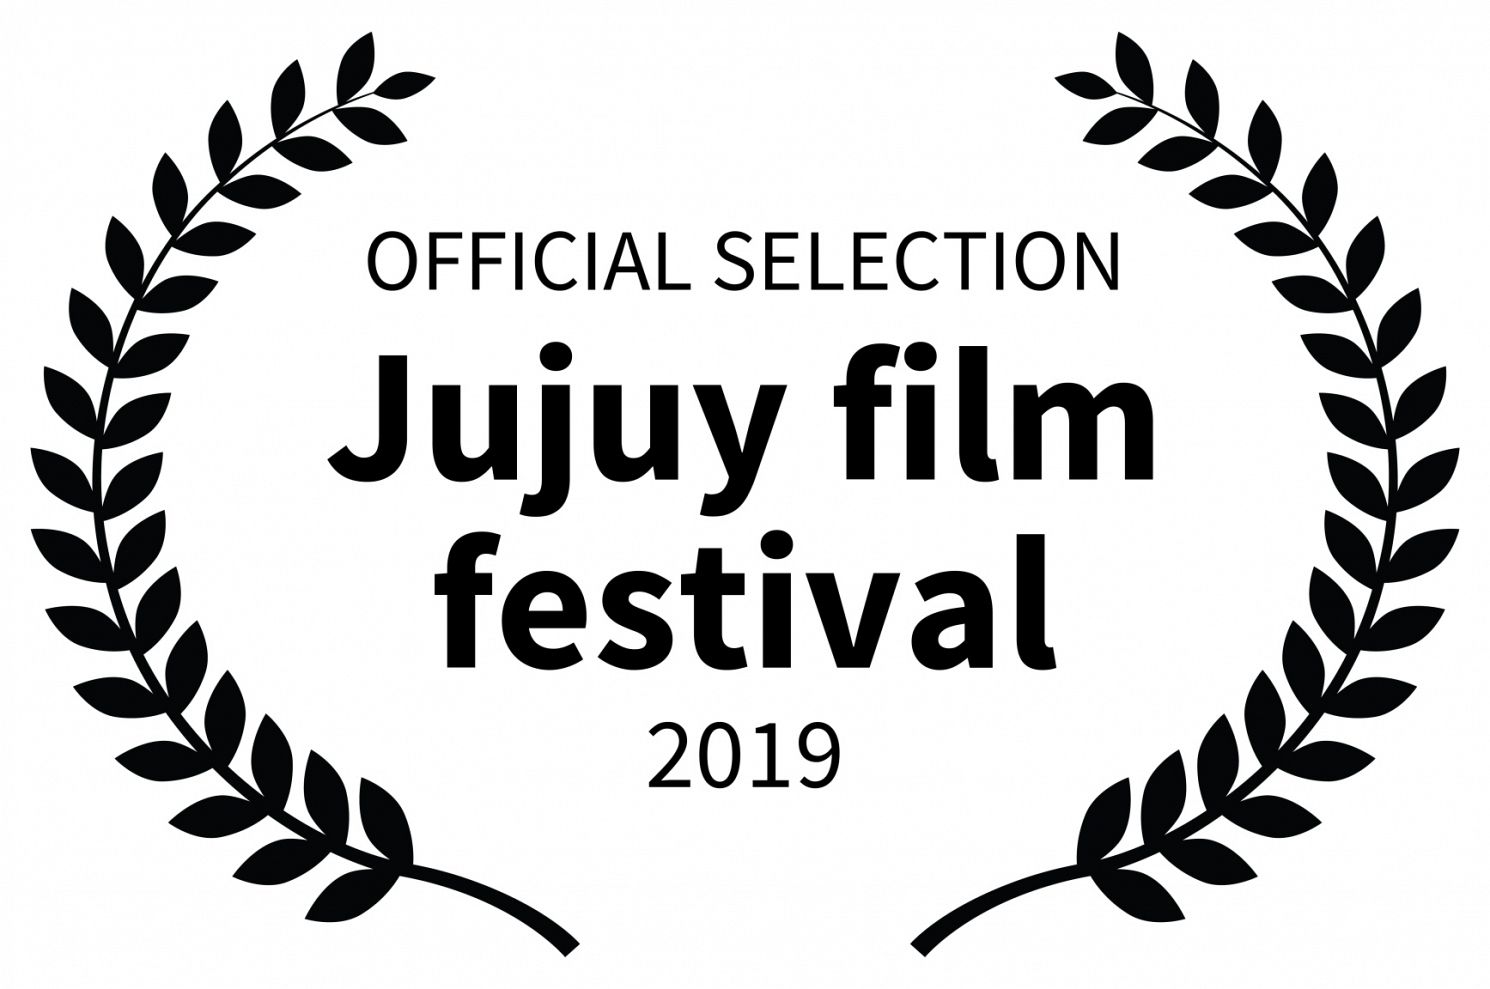 Jujuy Film Festival